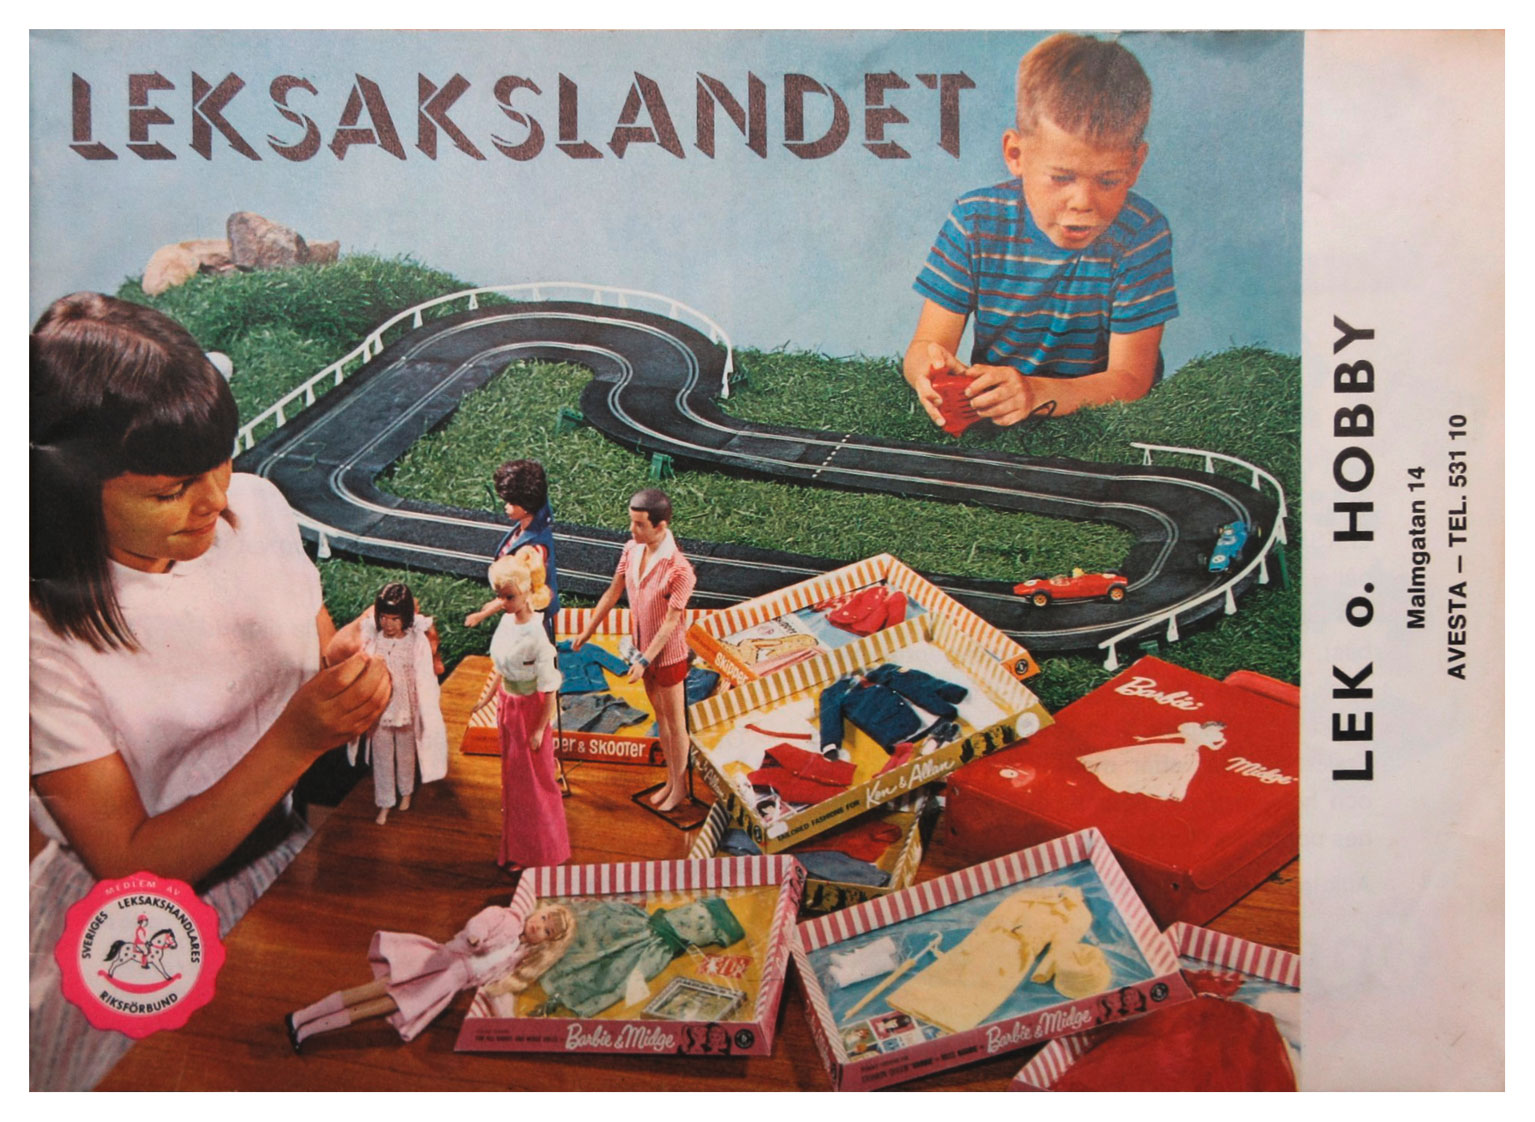 1965 Swedish Leksakslandet catalogue